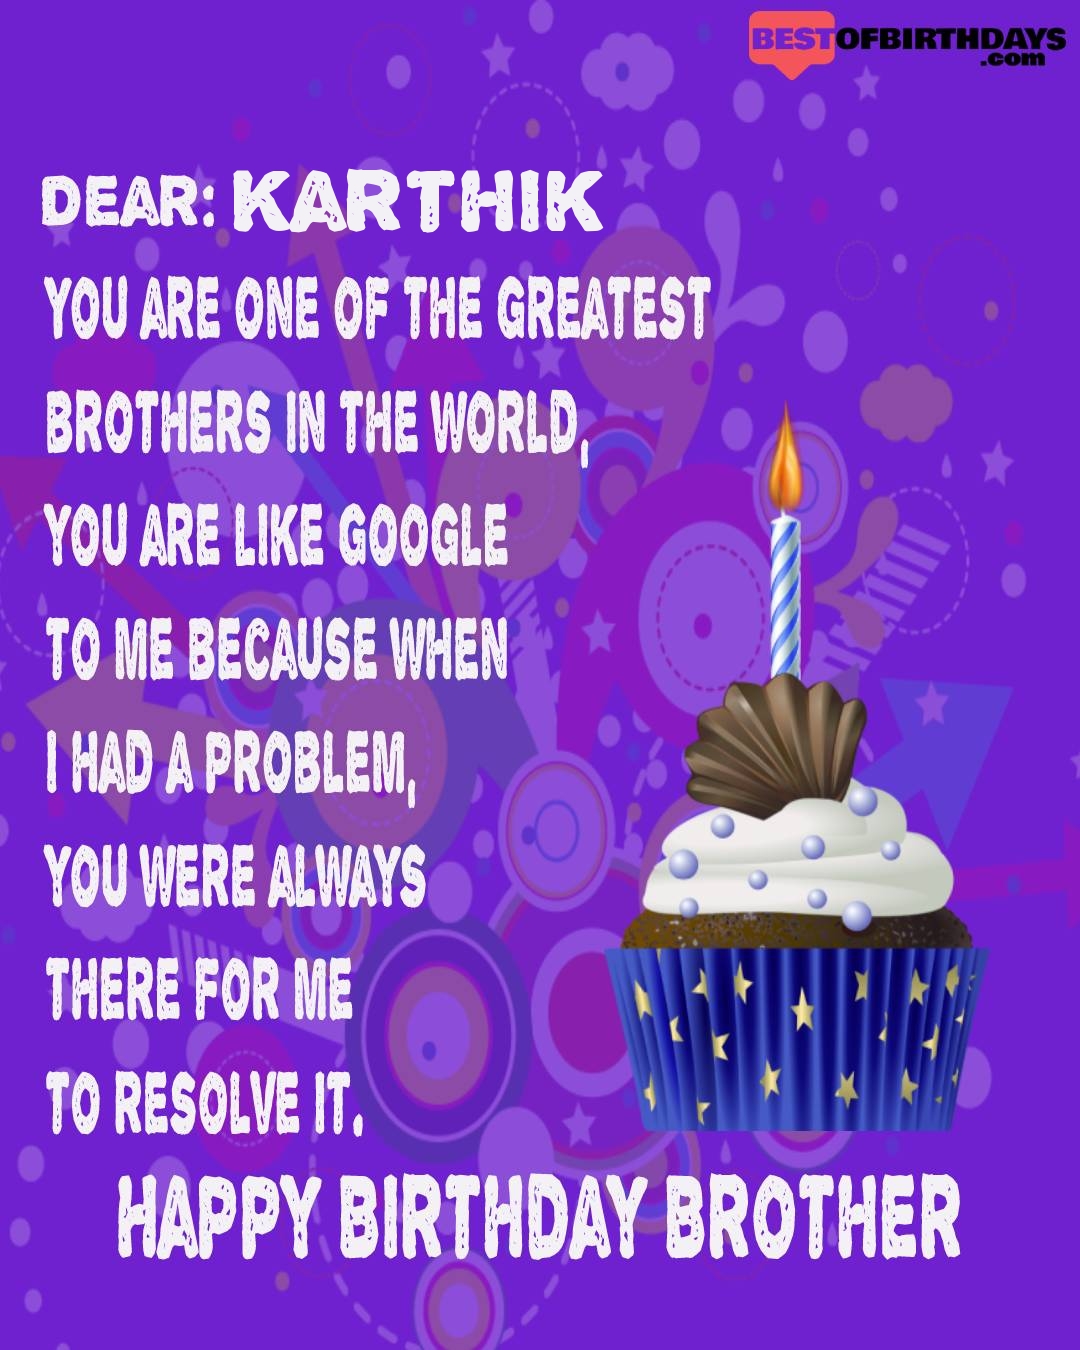 Happy birthday karthik bhai brother bro